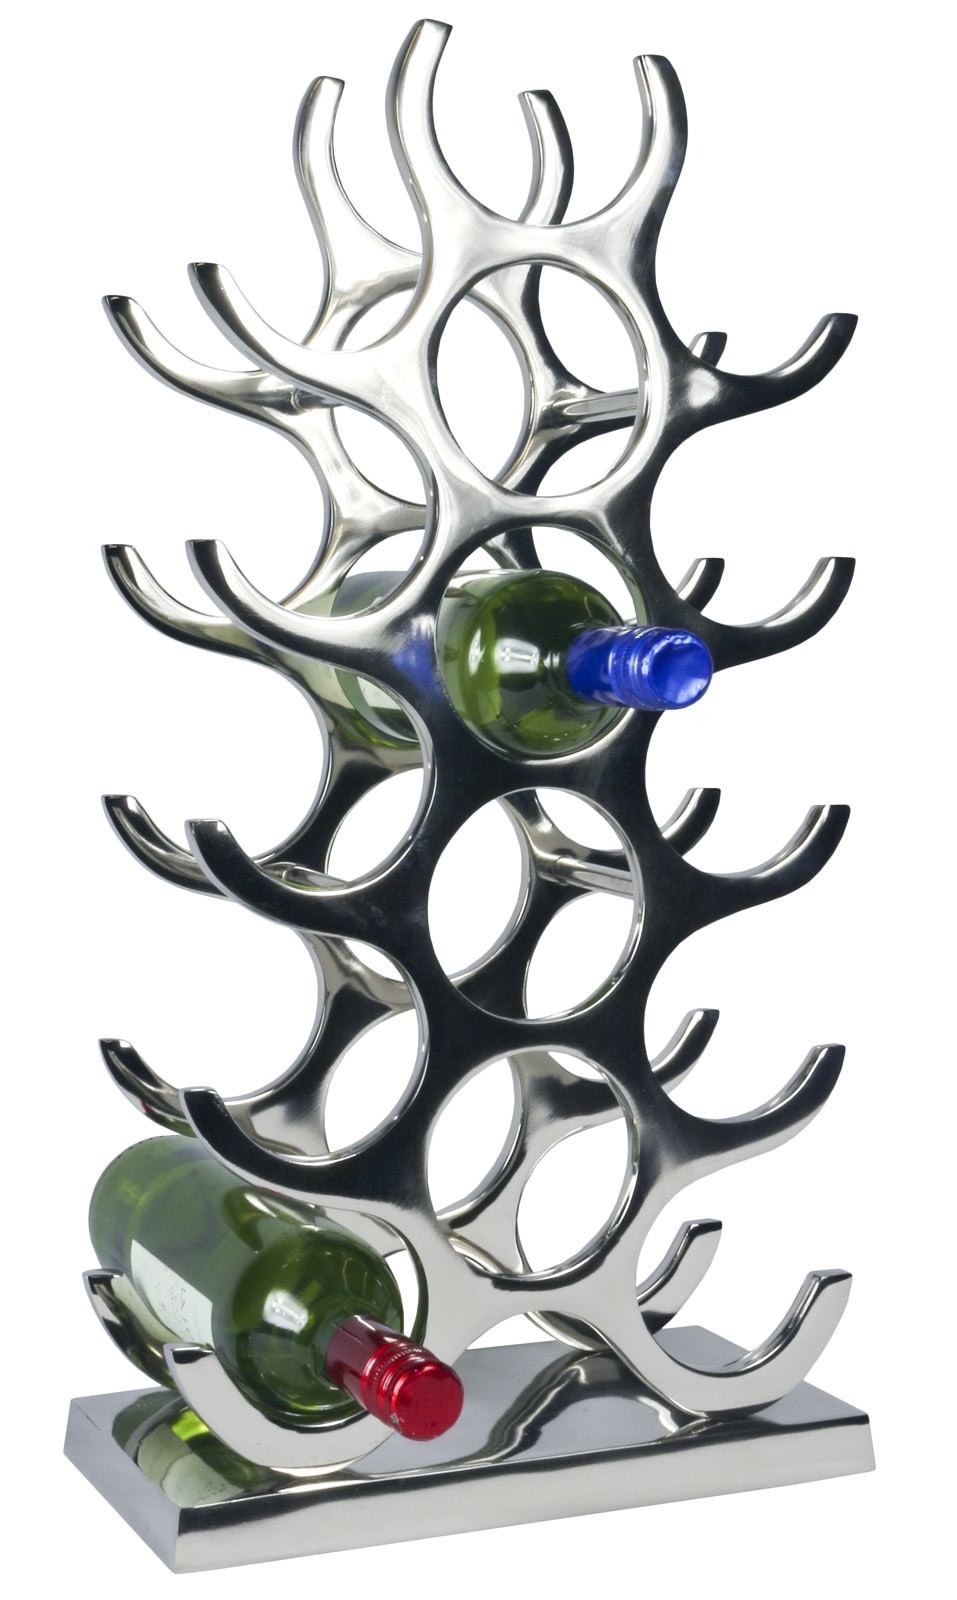 15 Bottle Wine Holder - Aluminium / Nickel Plated Finish 55.5cm